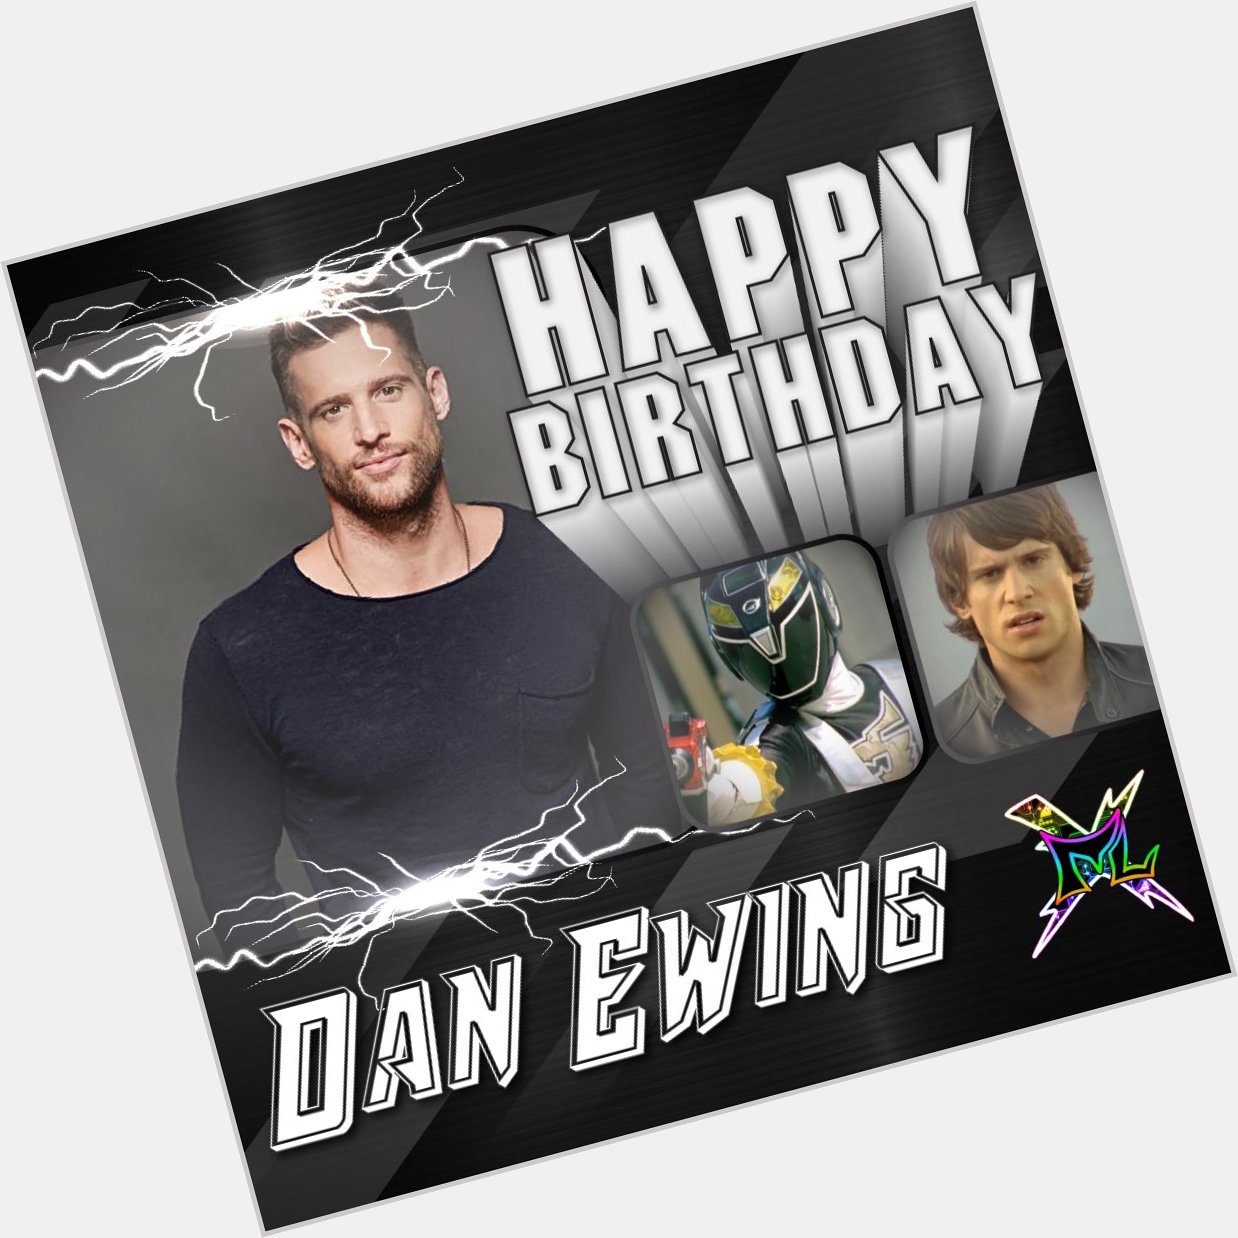 Happy birthday Dan Ewing  